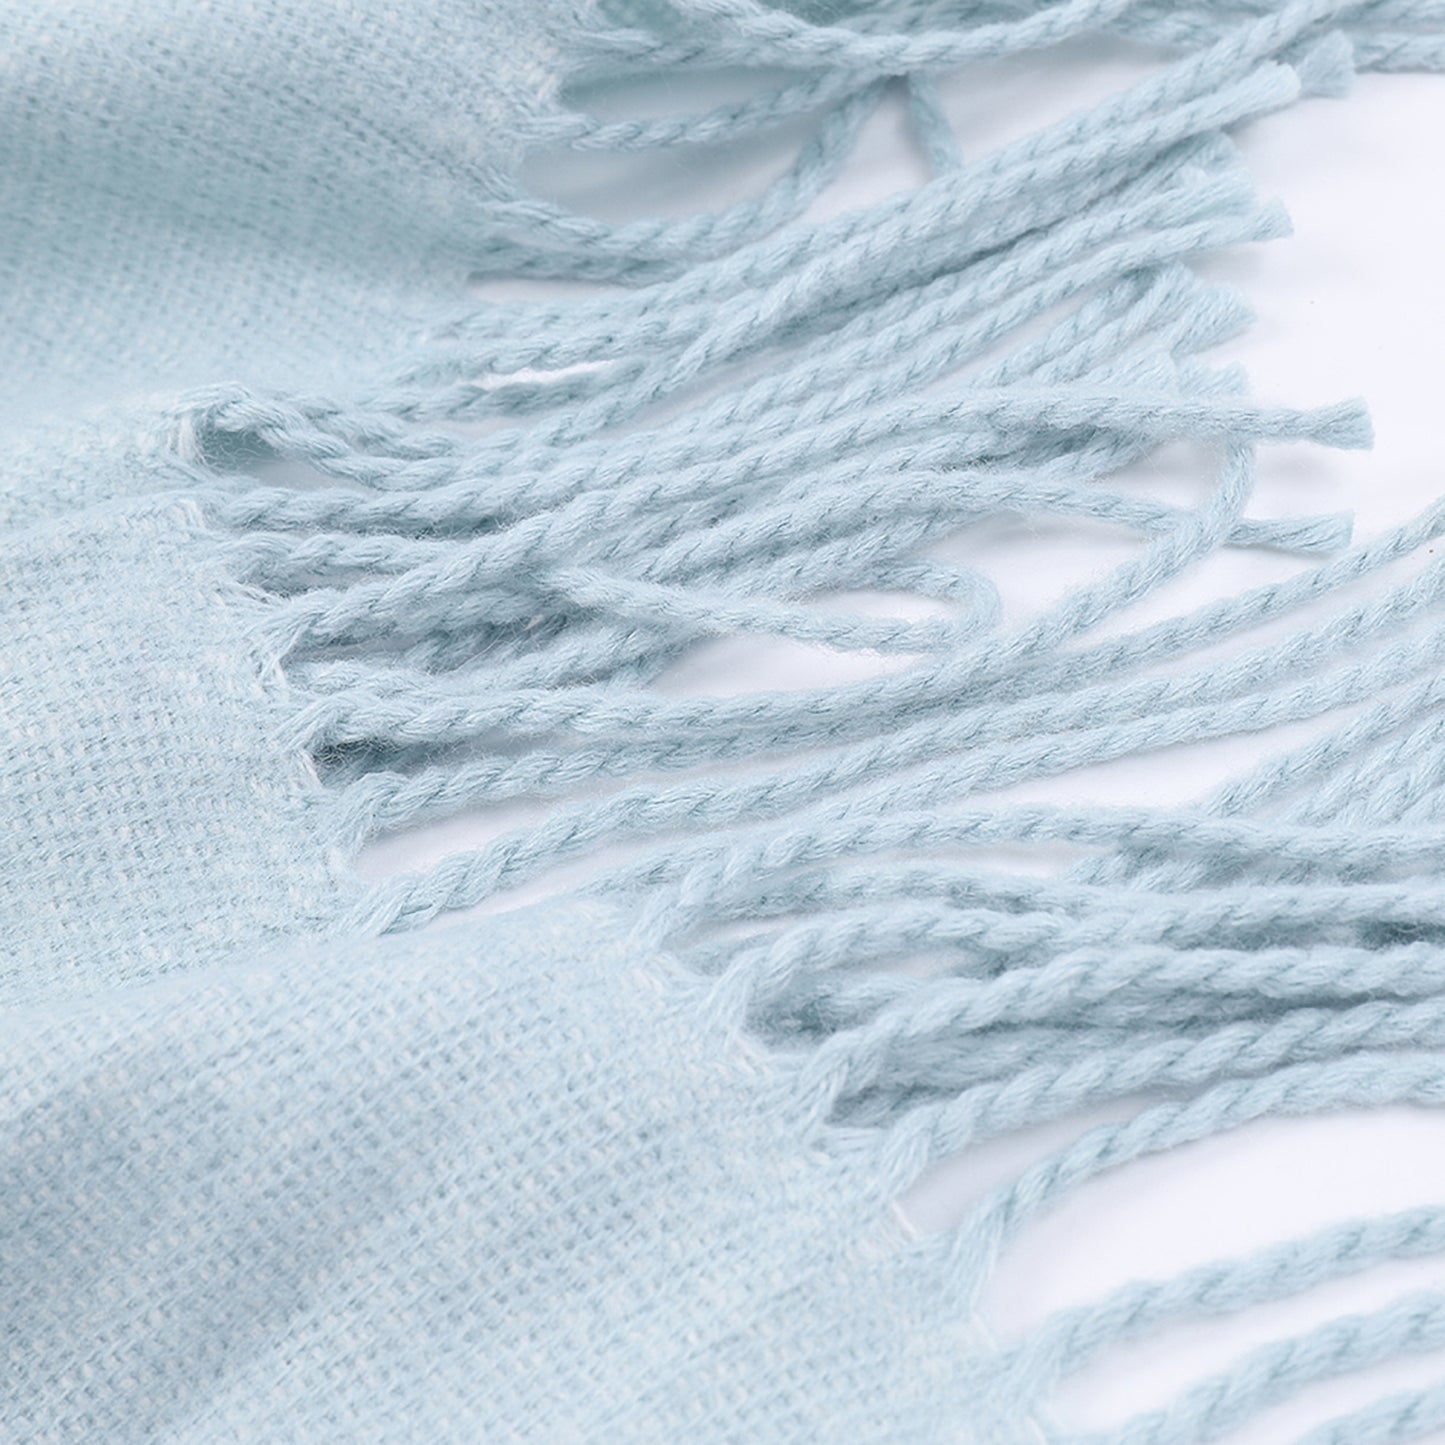 Knitted Throw Blanket Fringe Light Blue Decorative Tassel Boho Decor Woven Textured Soft Lightweight